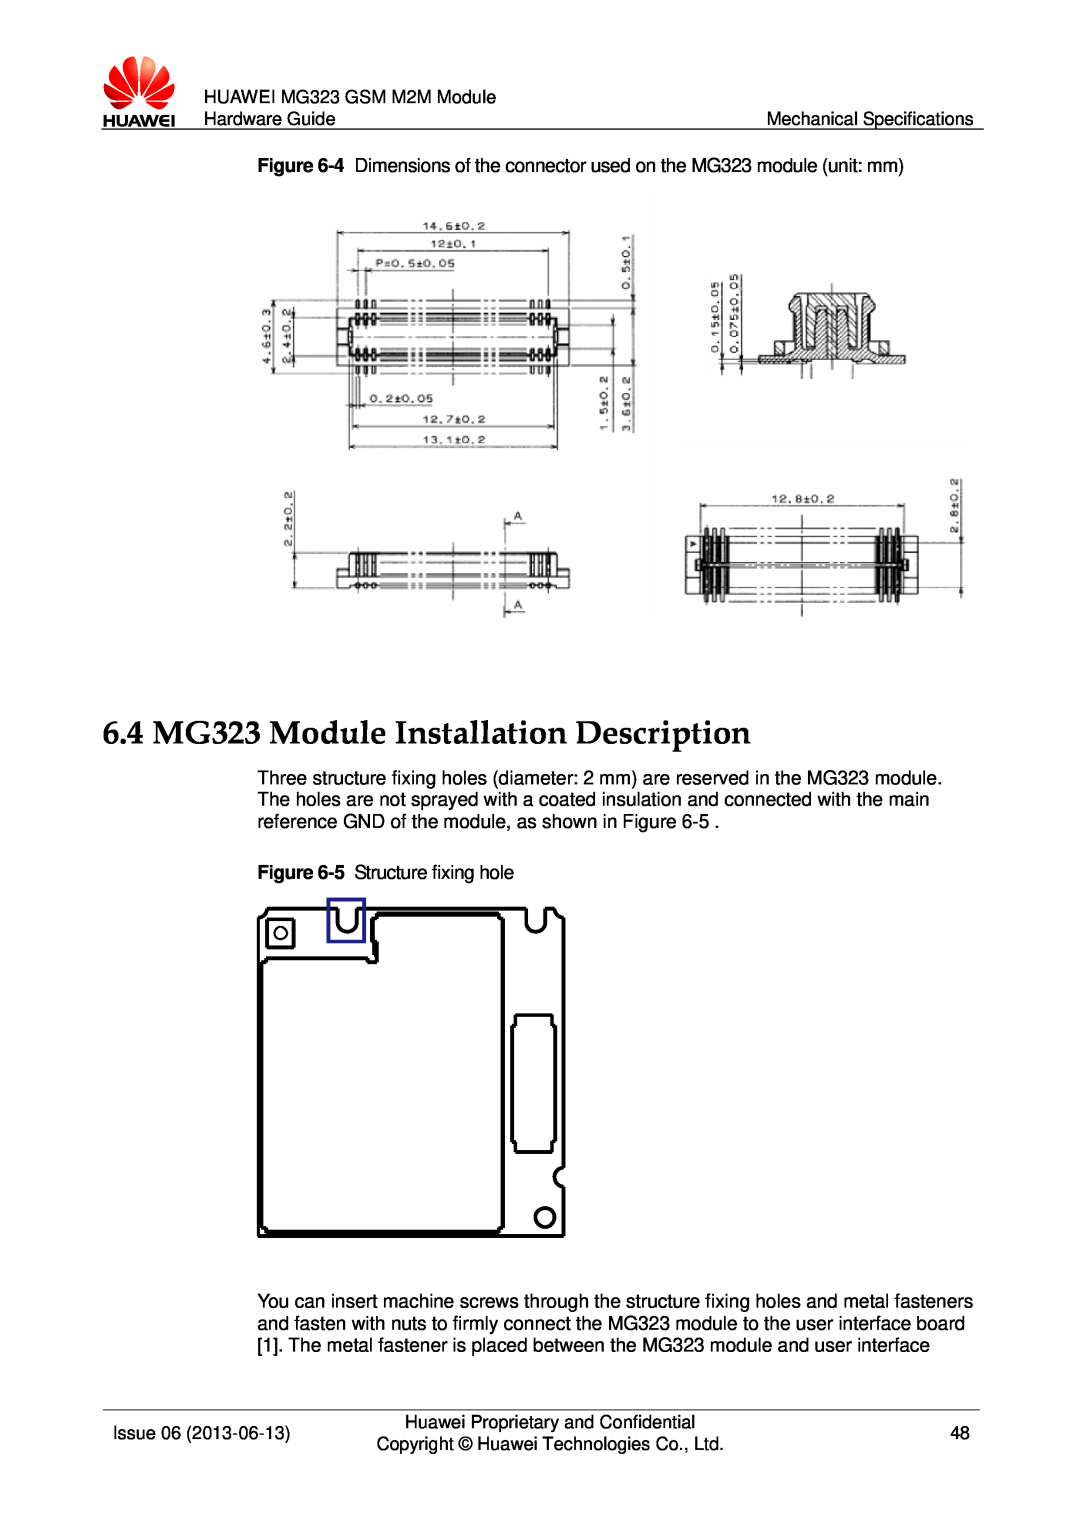 Huawei manual 6.4 MG323 Module Installation Description 